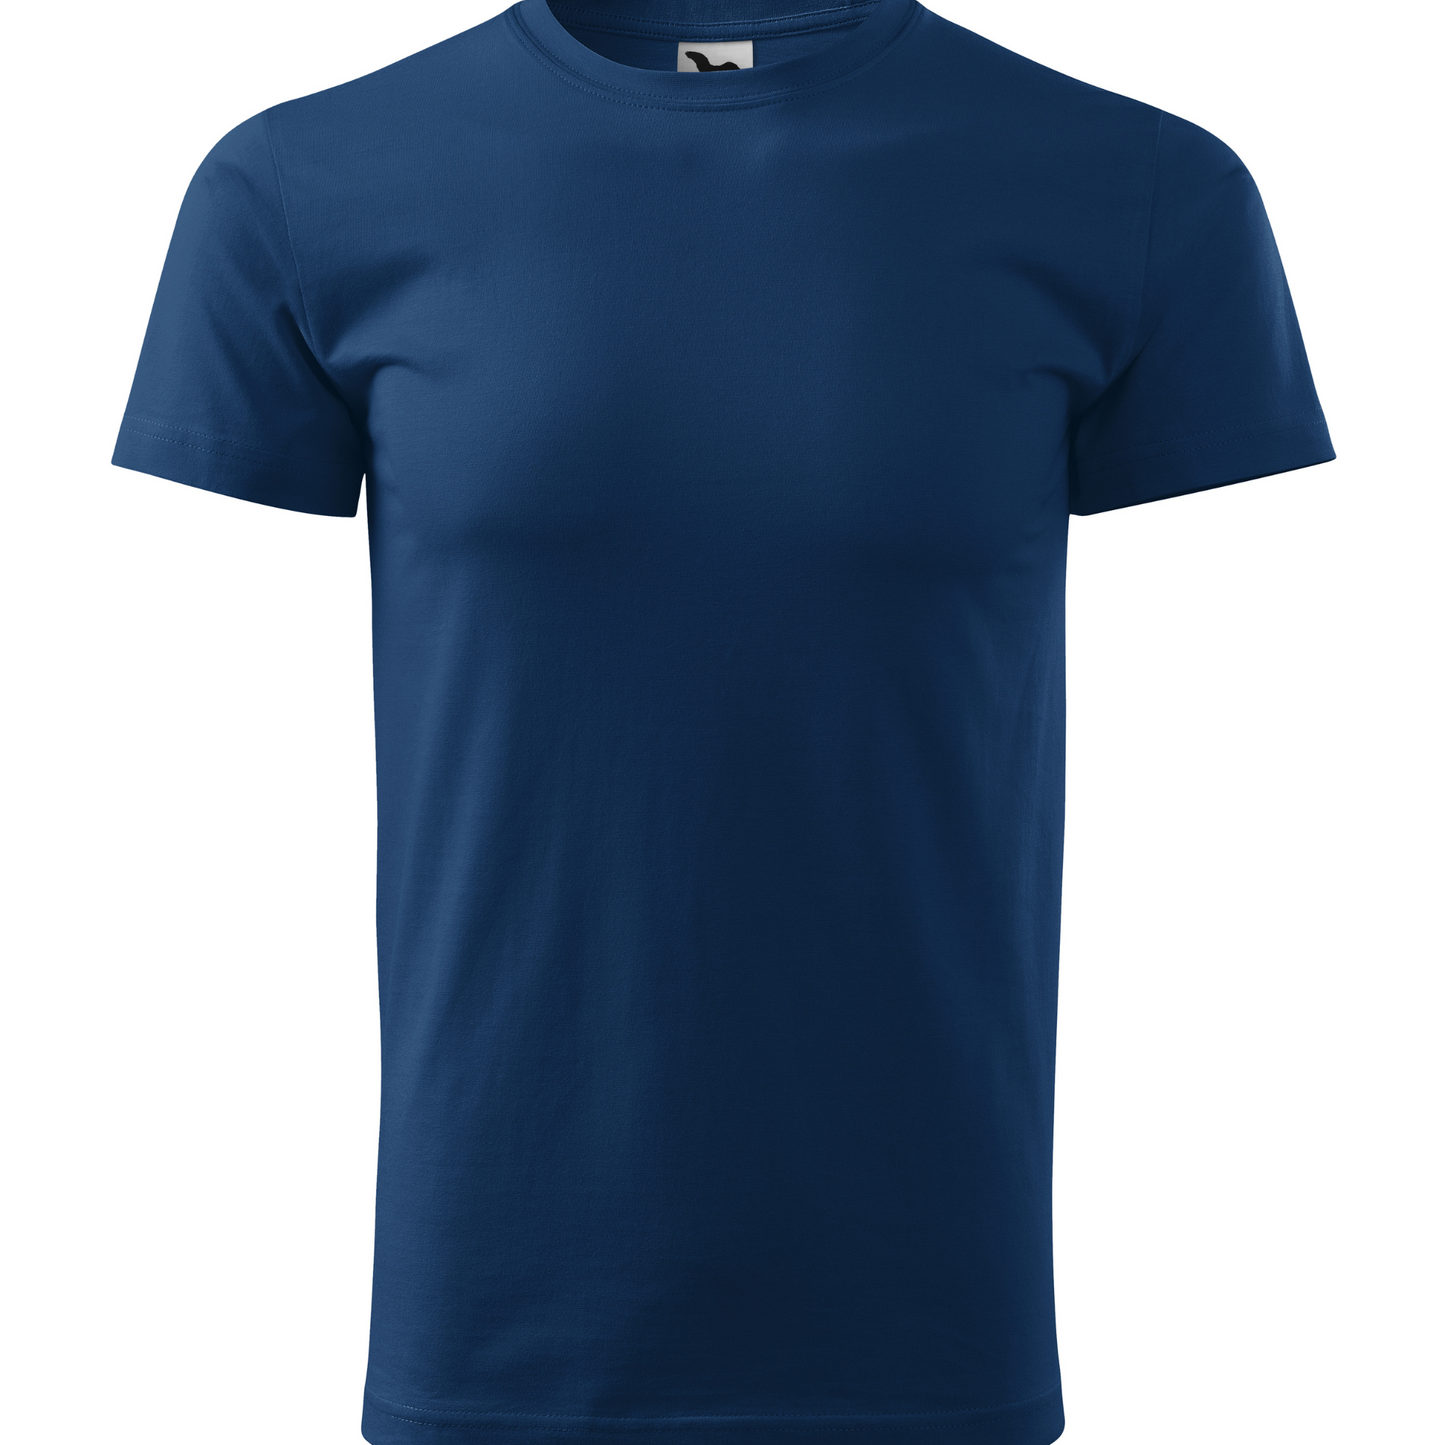 Tricou barbat - Variații Albastru